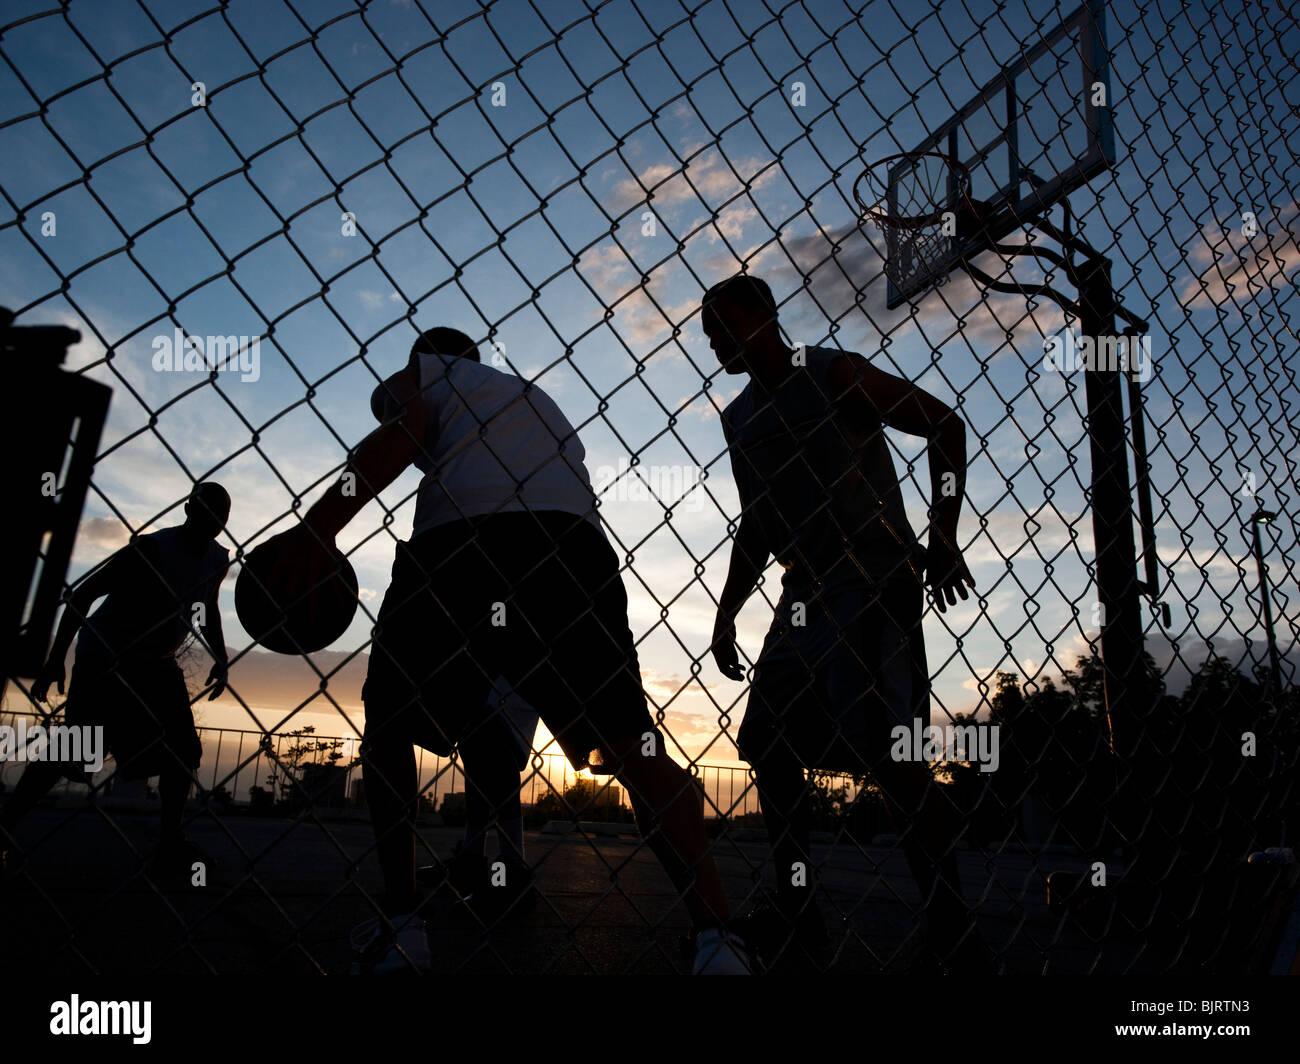 USA, Utah, Salt Lake City, four young men playing street basketball, low angle view Stock Photo